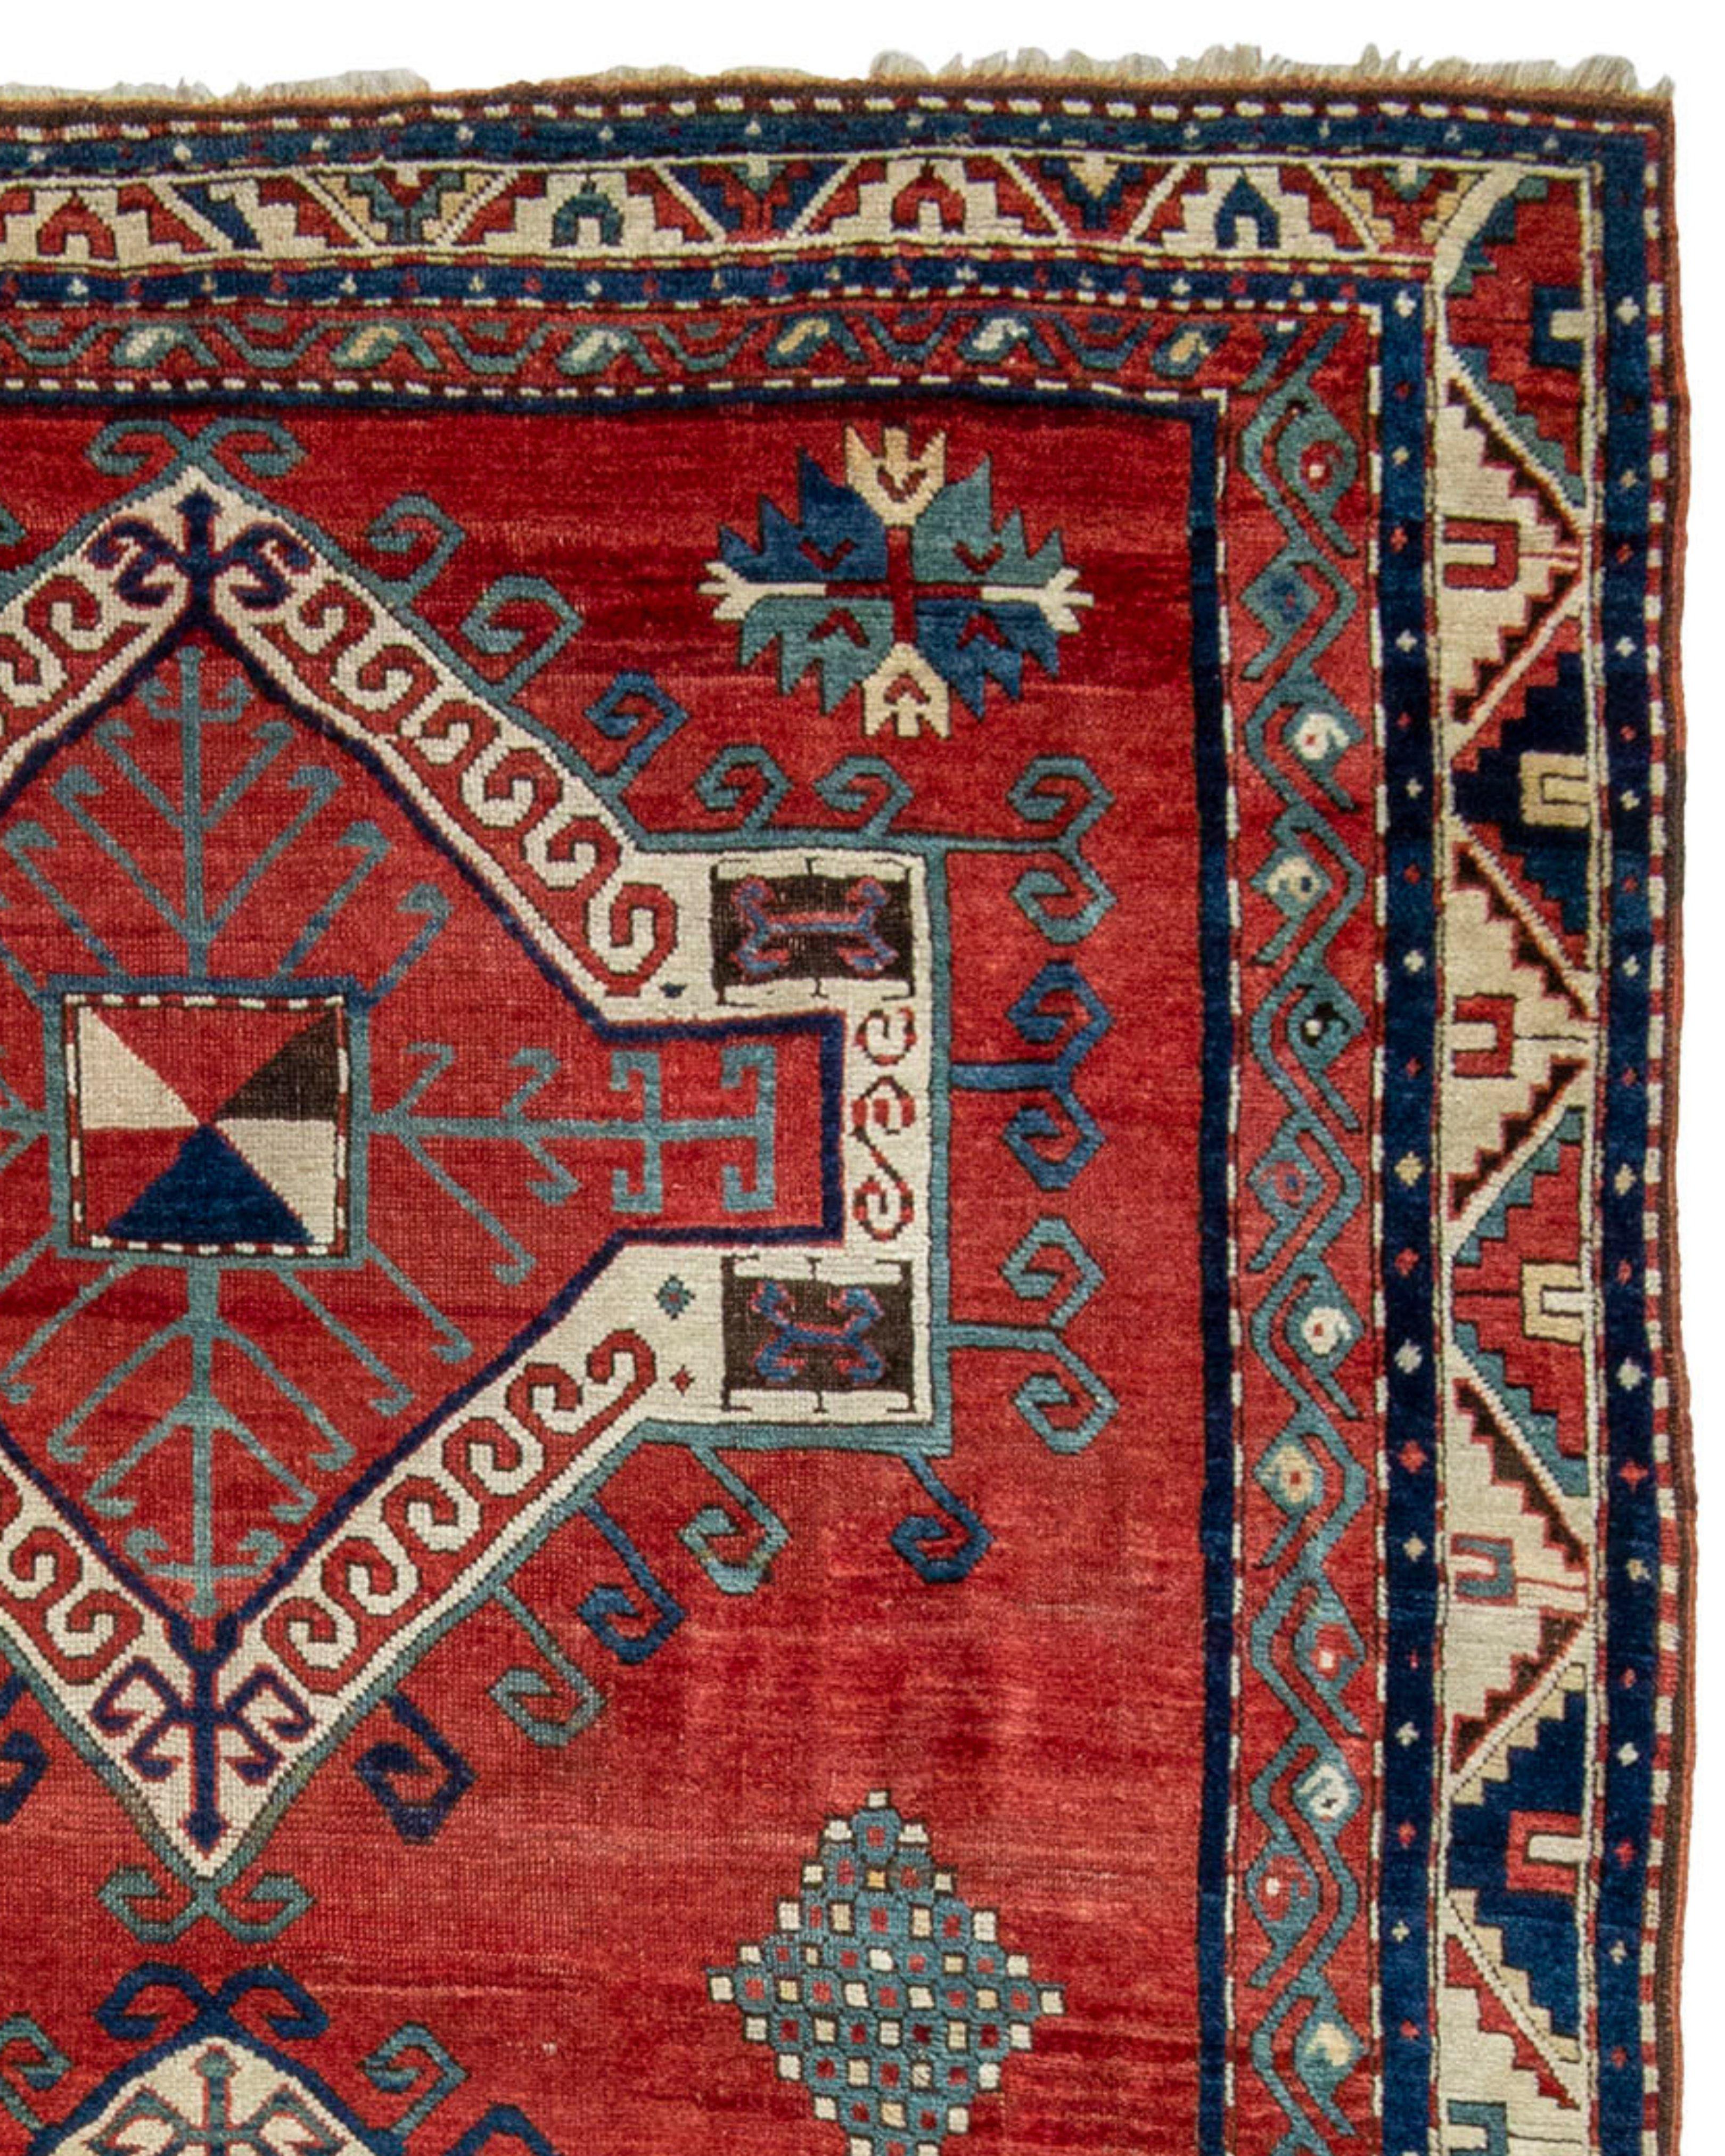 Antique Caucasian Kazak Rug, 19th Century

Additional Information
Dimensions: 5'6